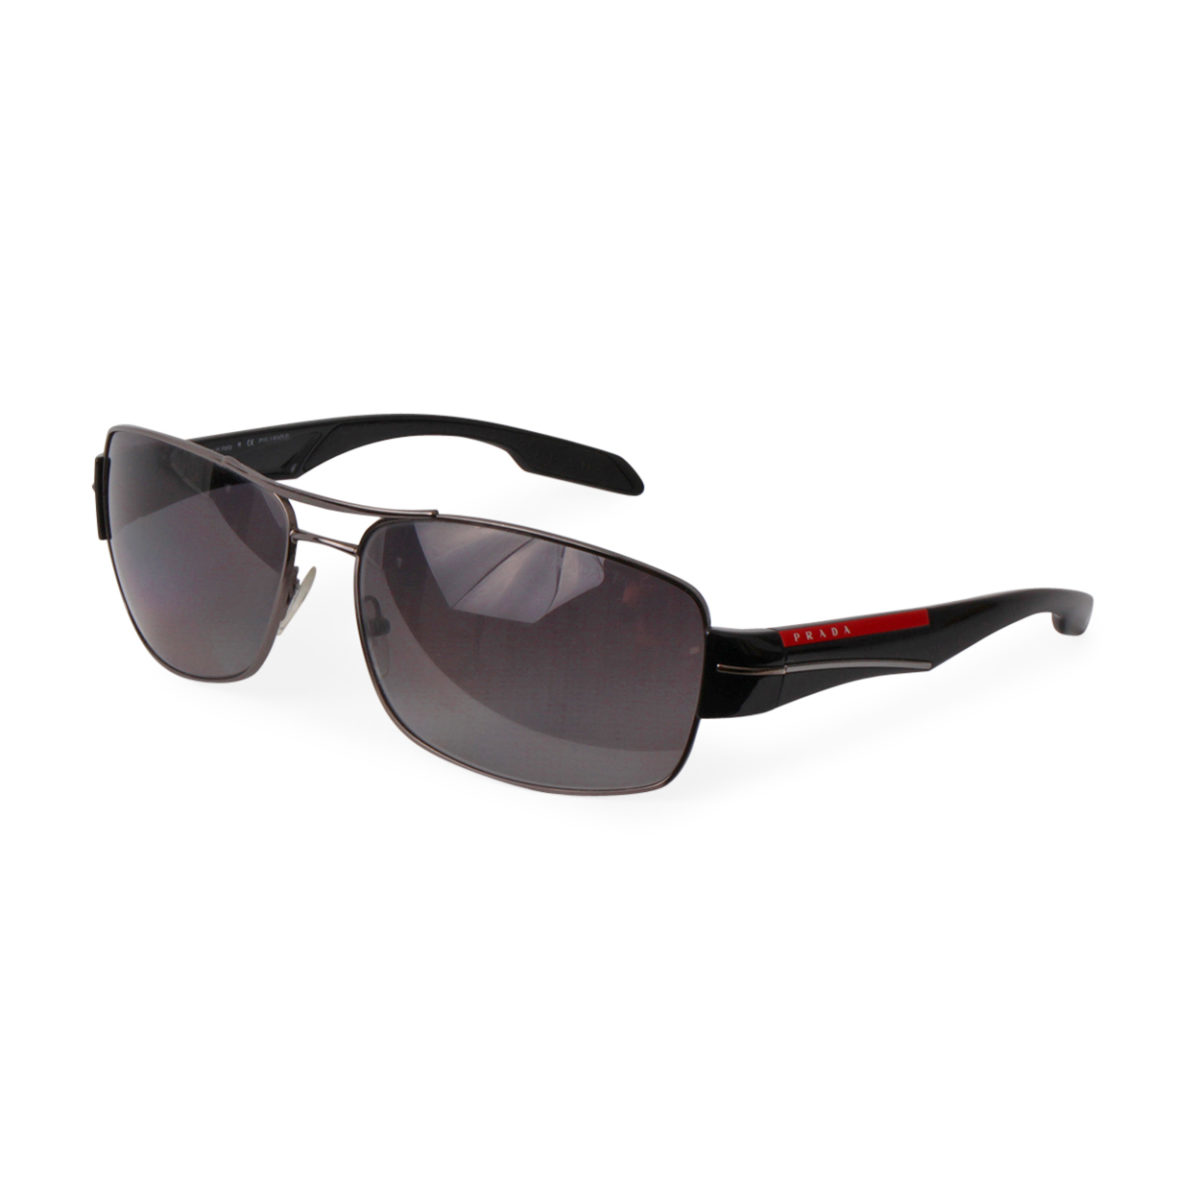 PRADA Polarized Sunglasses SPS 53N 